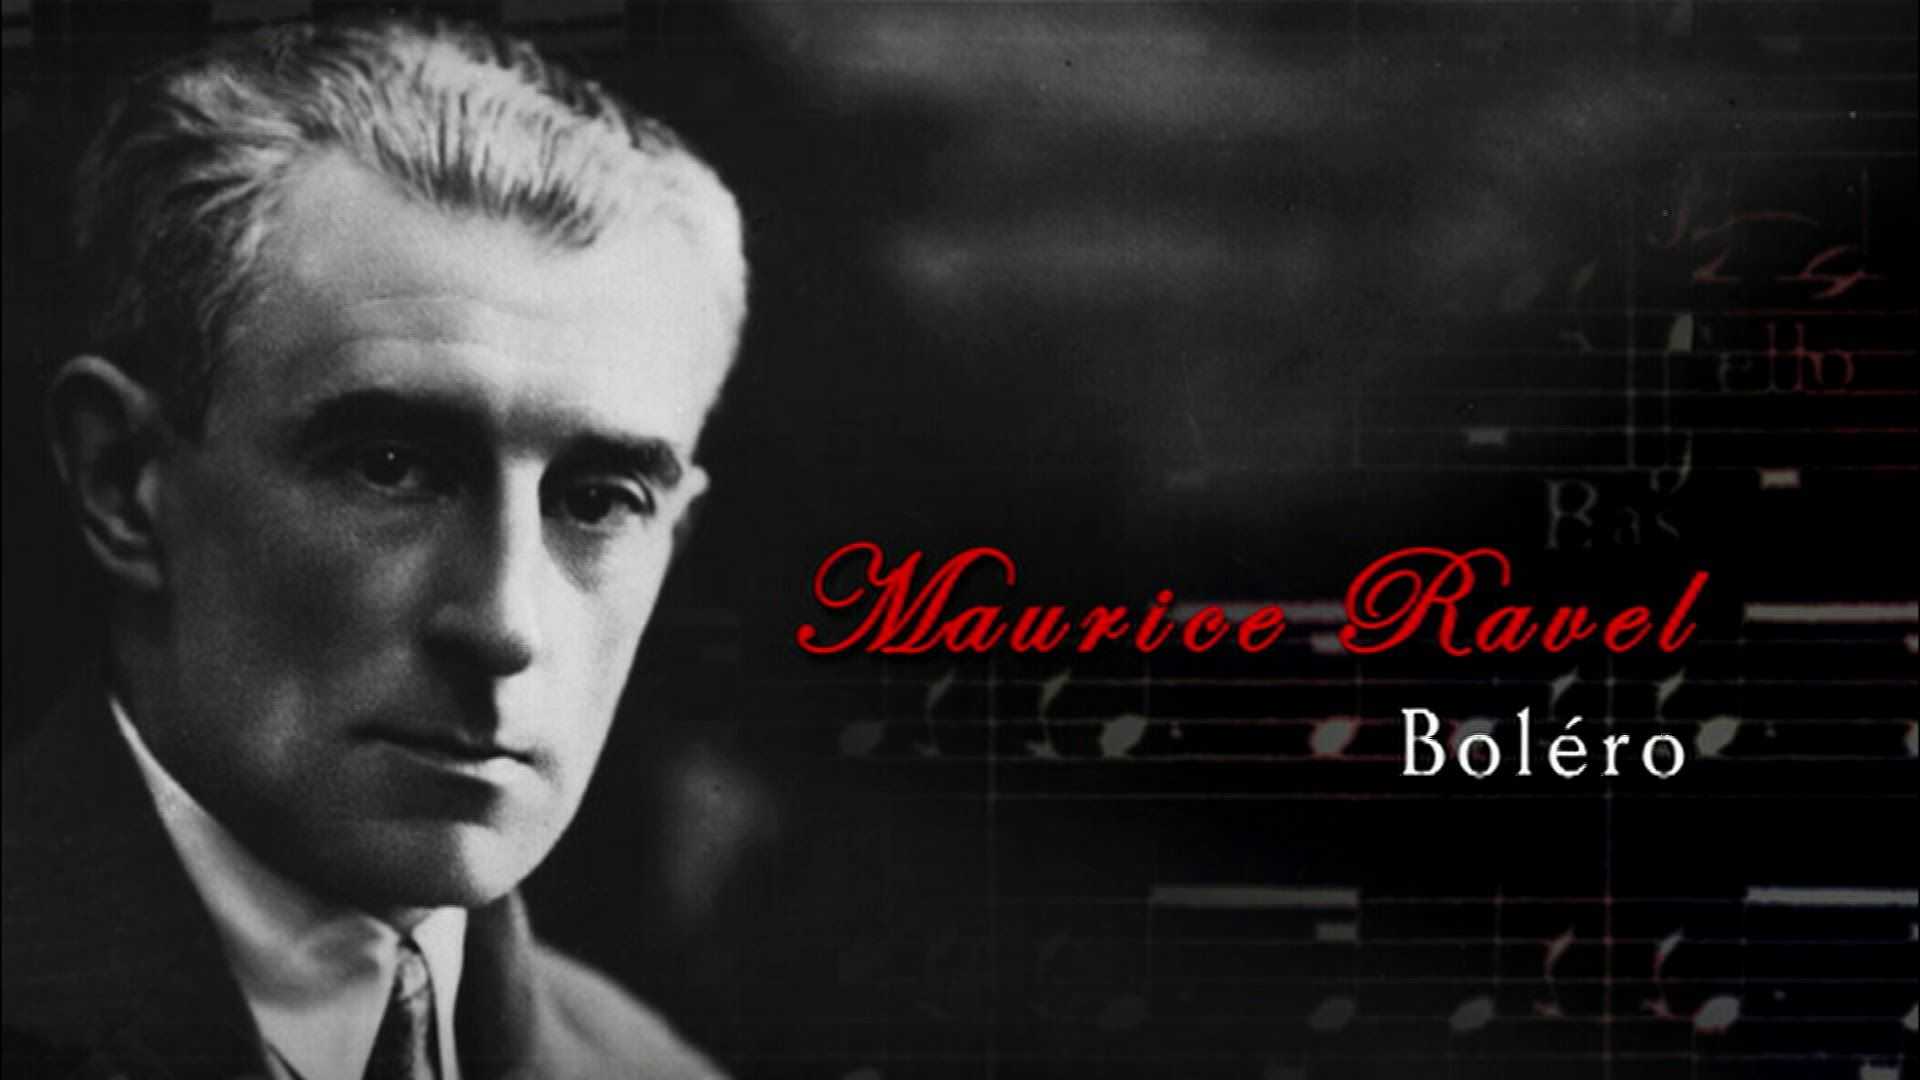 Рав ел. Maurice Ravel - Bolero (1928). Жозеф Морис Равель болеро. «Болеро» Мориса Равеля. Морис Равель (1875–1937).